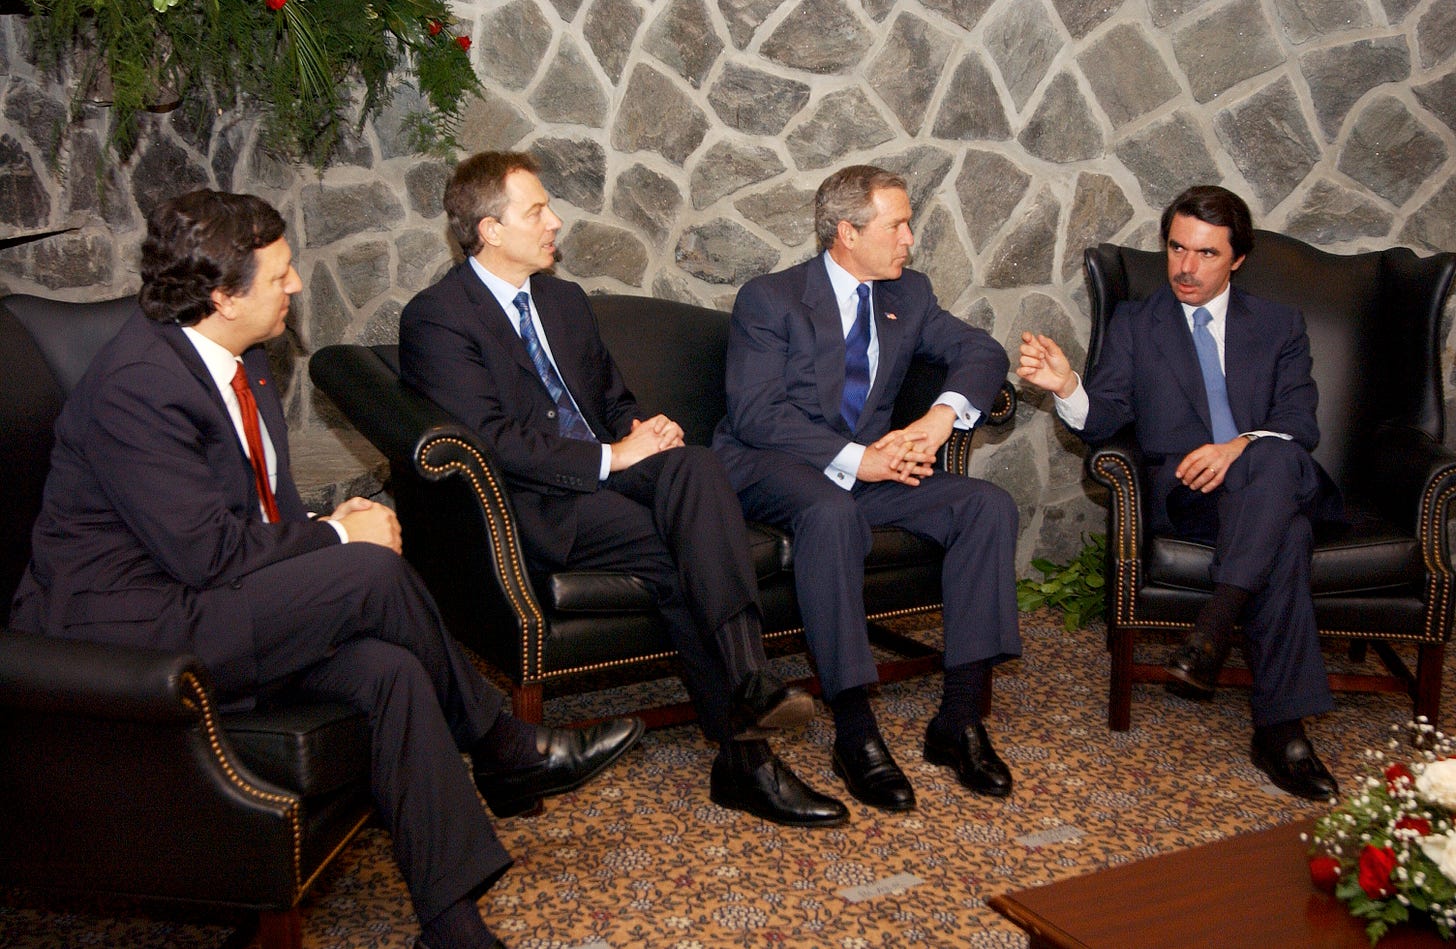 https://upload.wikimedia.org/wikipedia/commons/6/61/Bush%2C_Barroso%2C_Blair%2C_Aznar_at_Azores.jpg